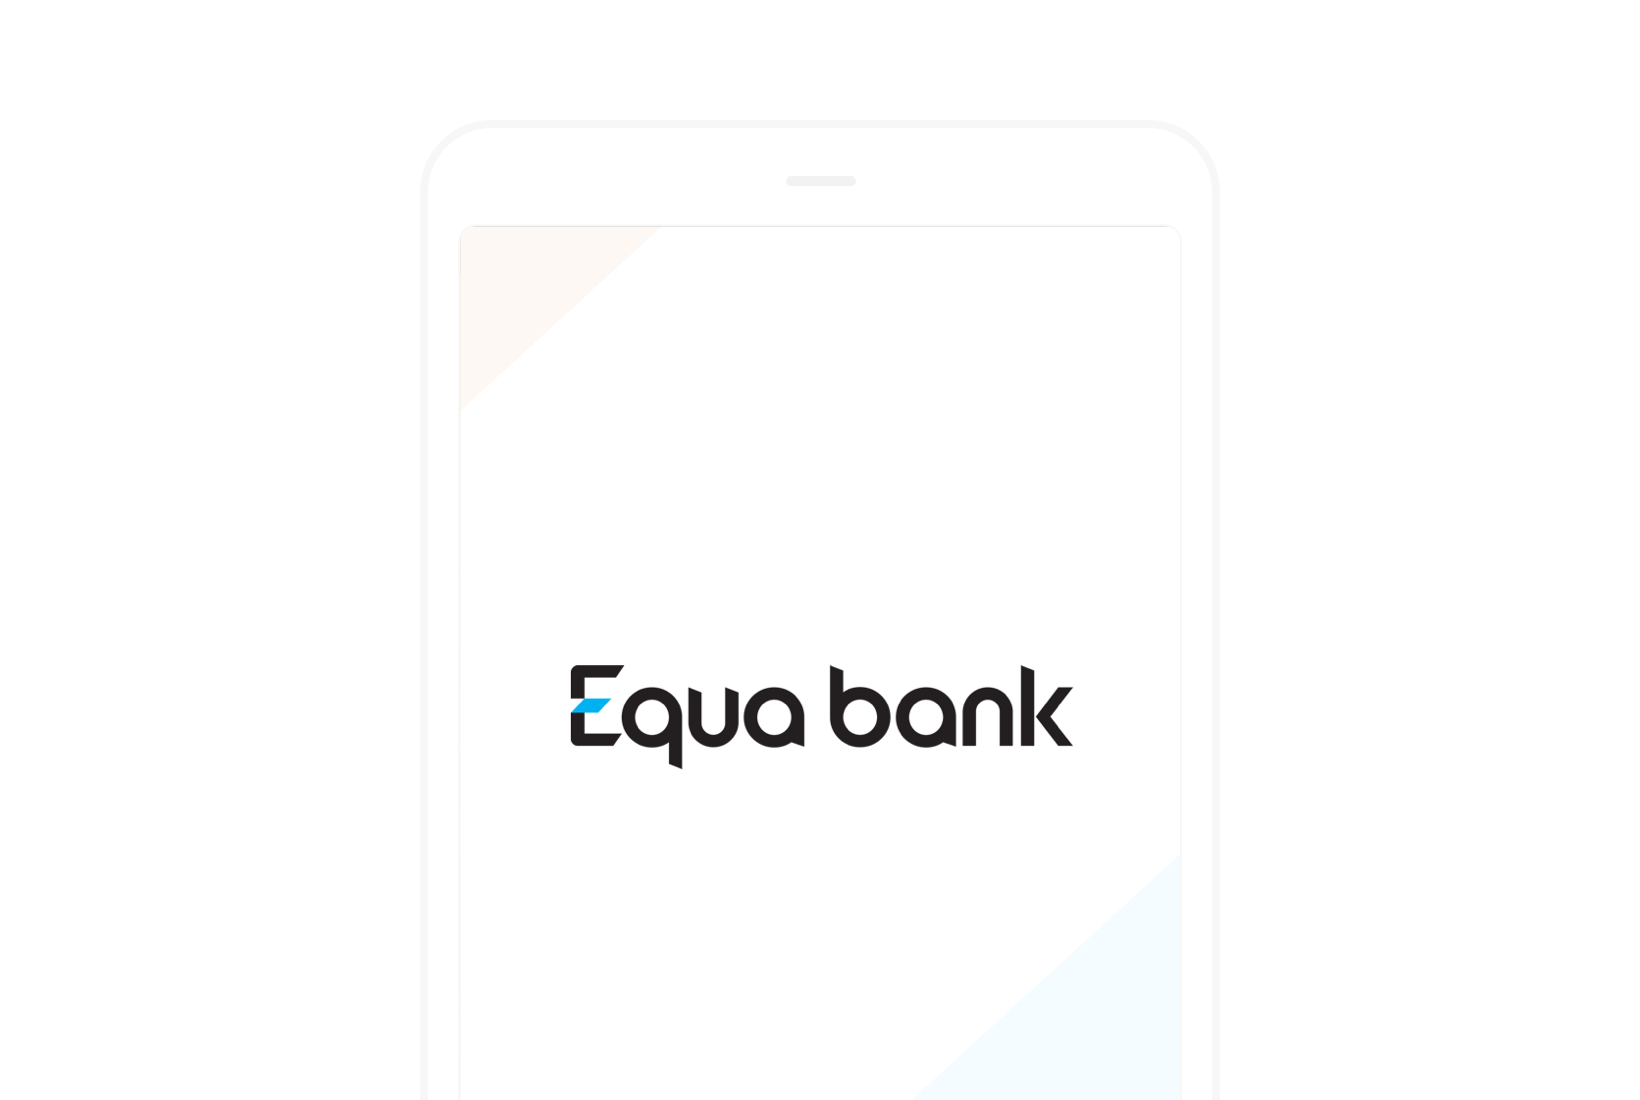  equa-bank 